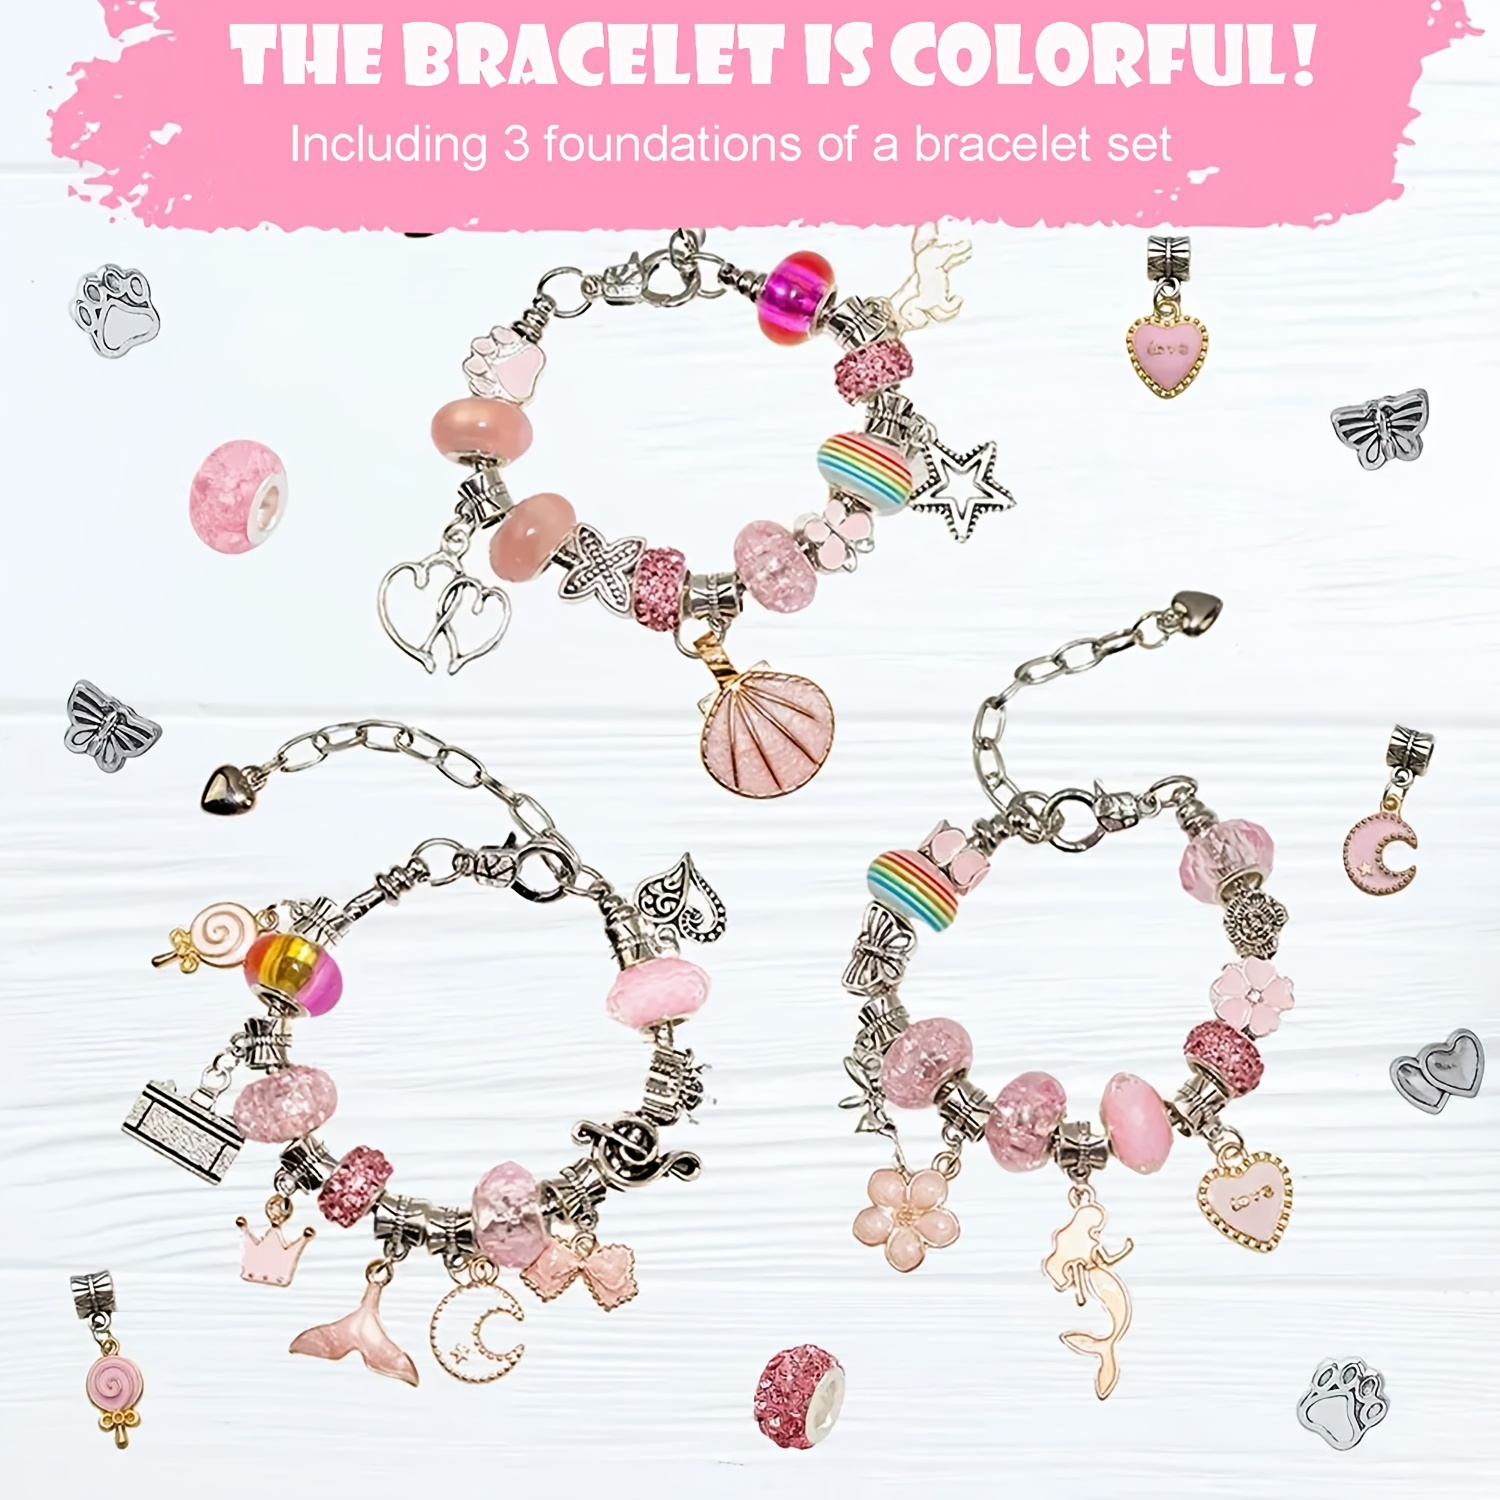 Beads, Unicorn/Mermaid Crafts Gifts Set Jewelry Set Bracelet